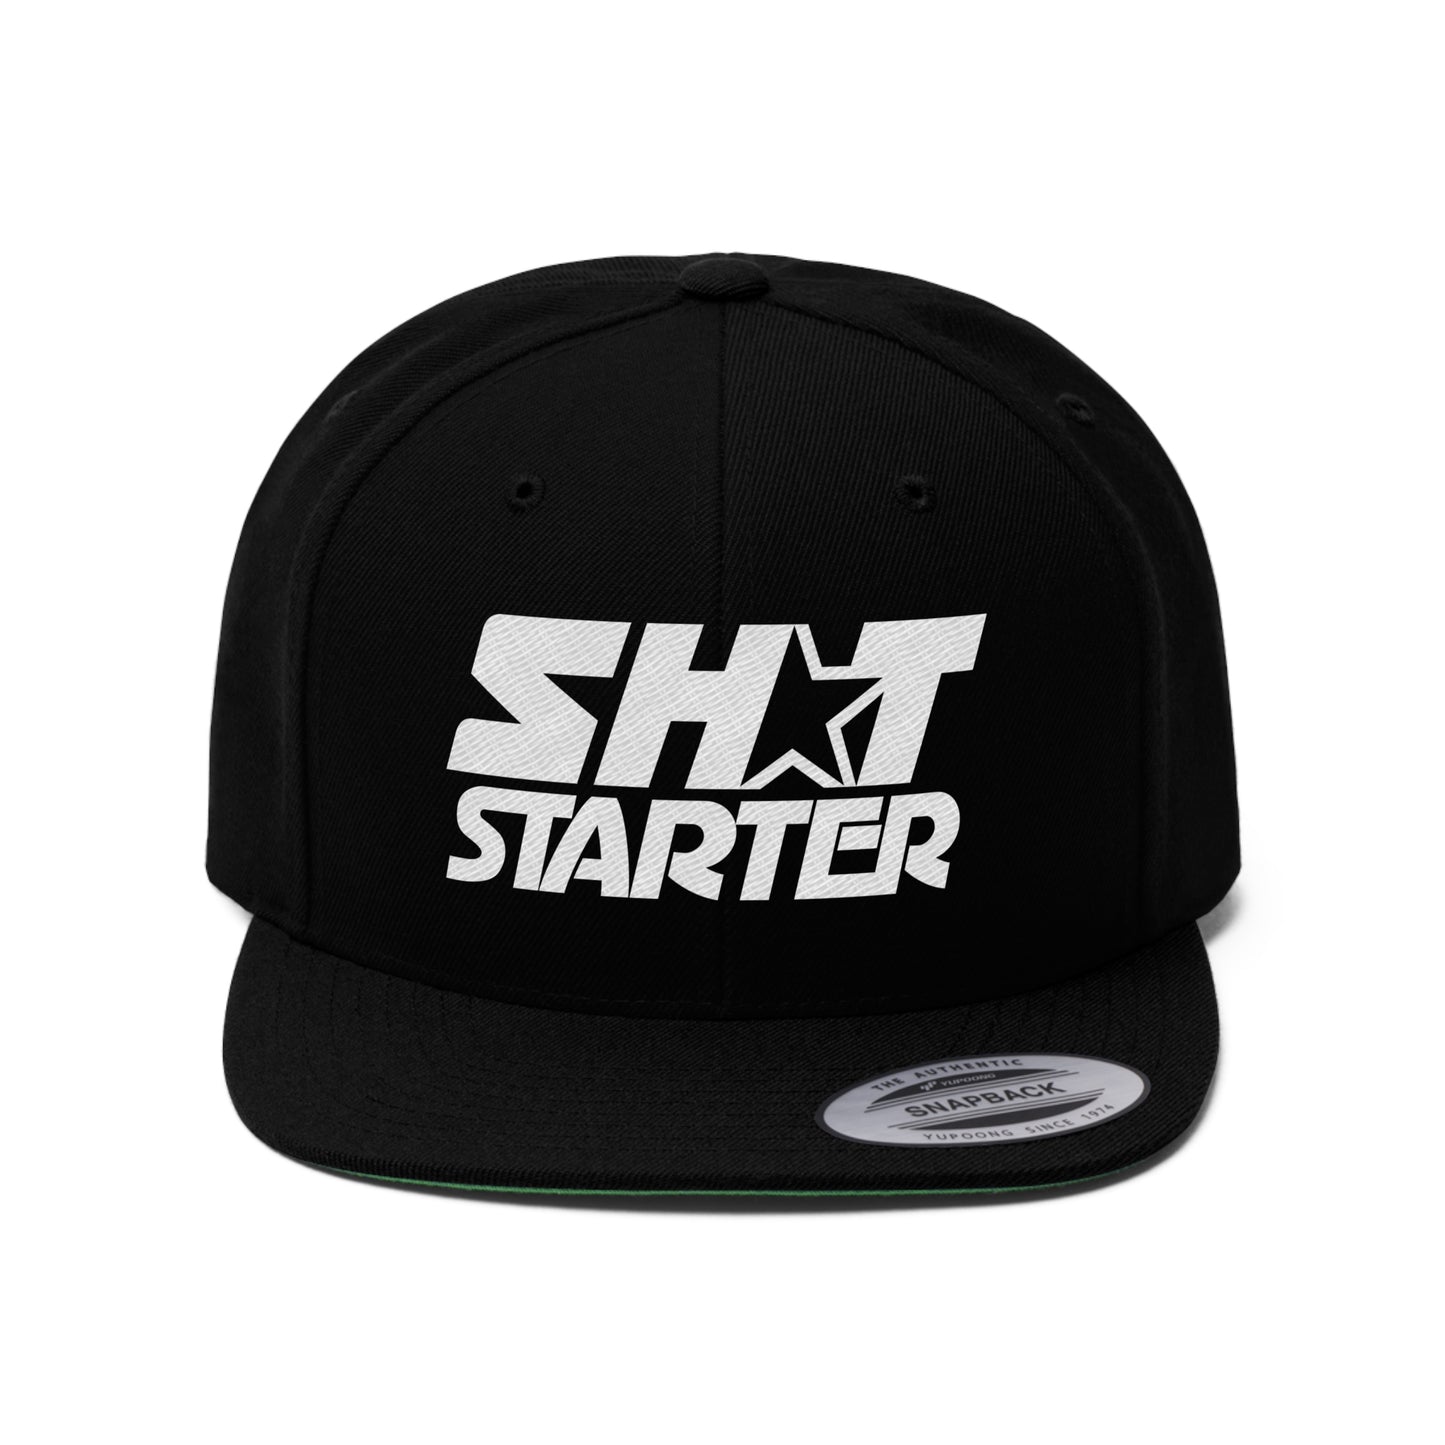 SH*T STARTER snapback hat